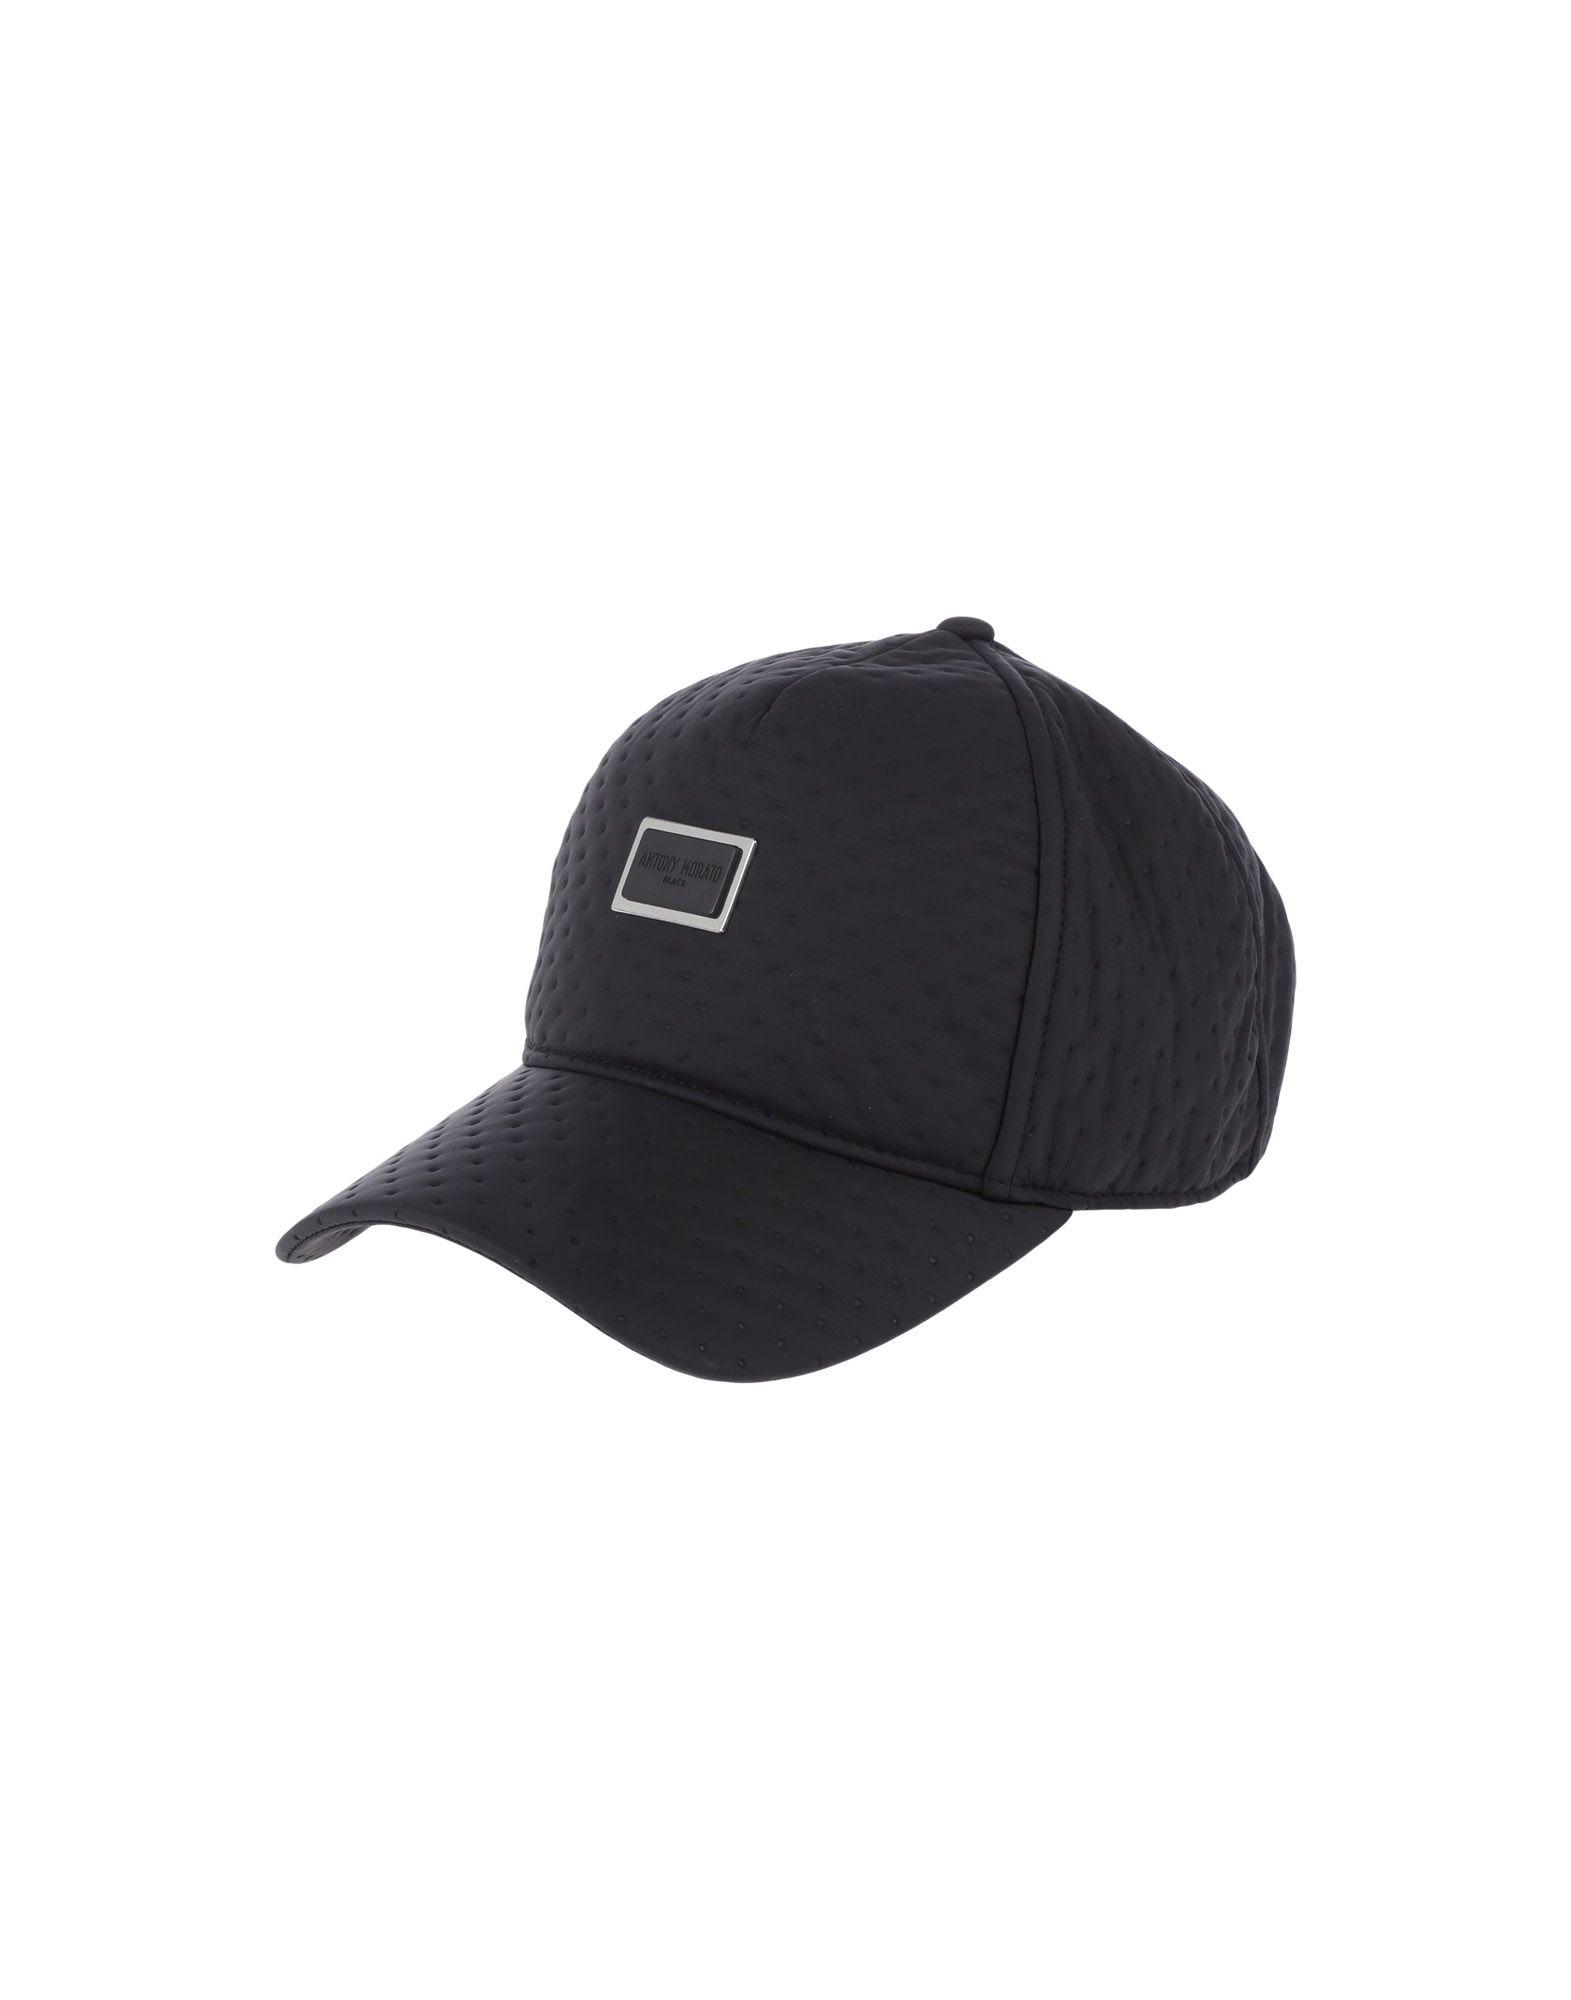 Antony Morato Synthetic Hat in Black for Men - Lyst